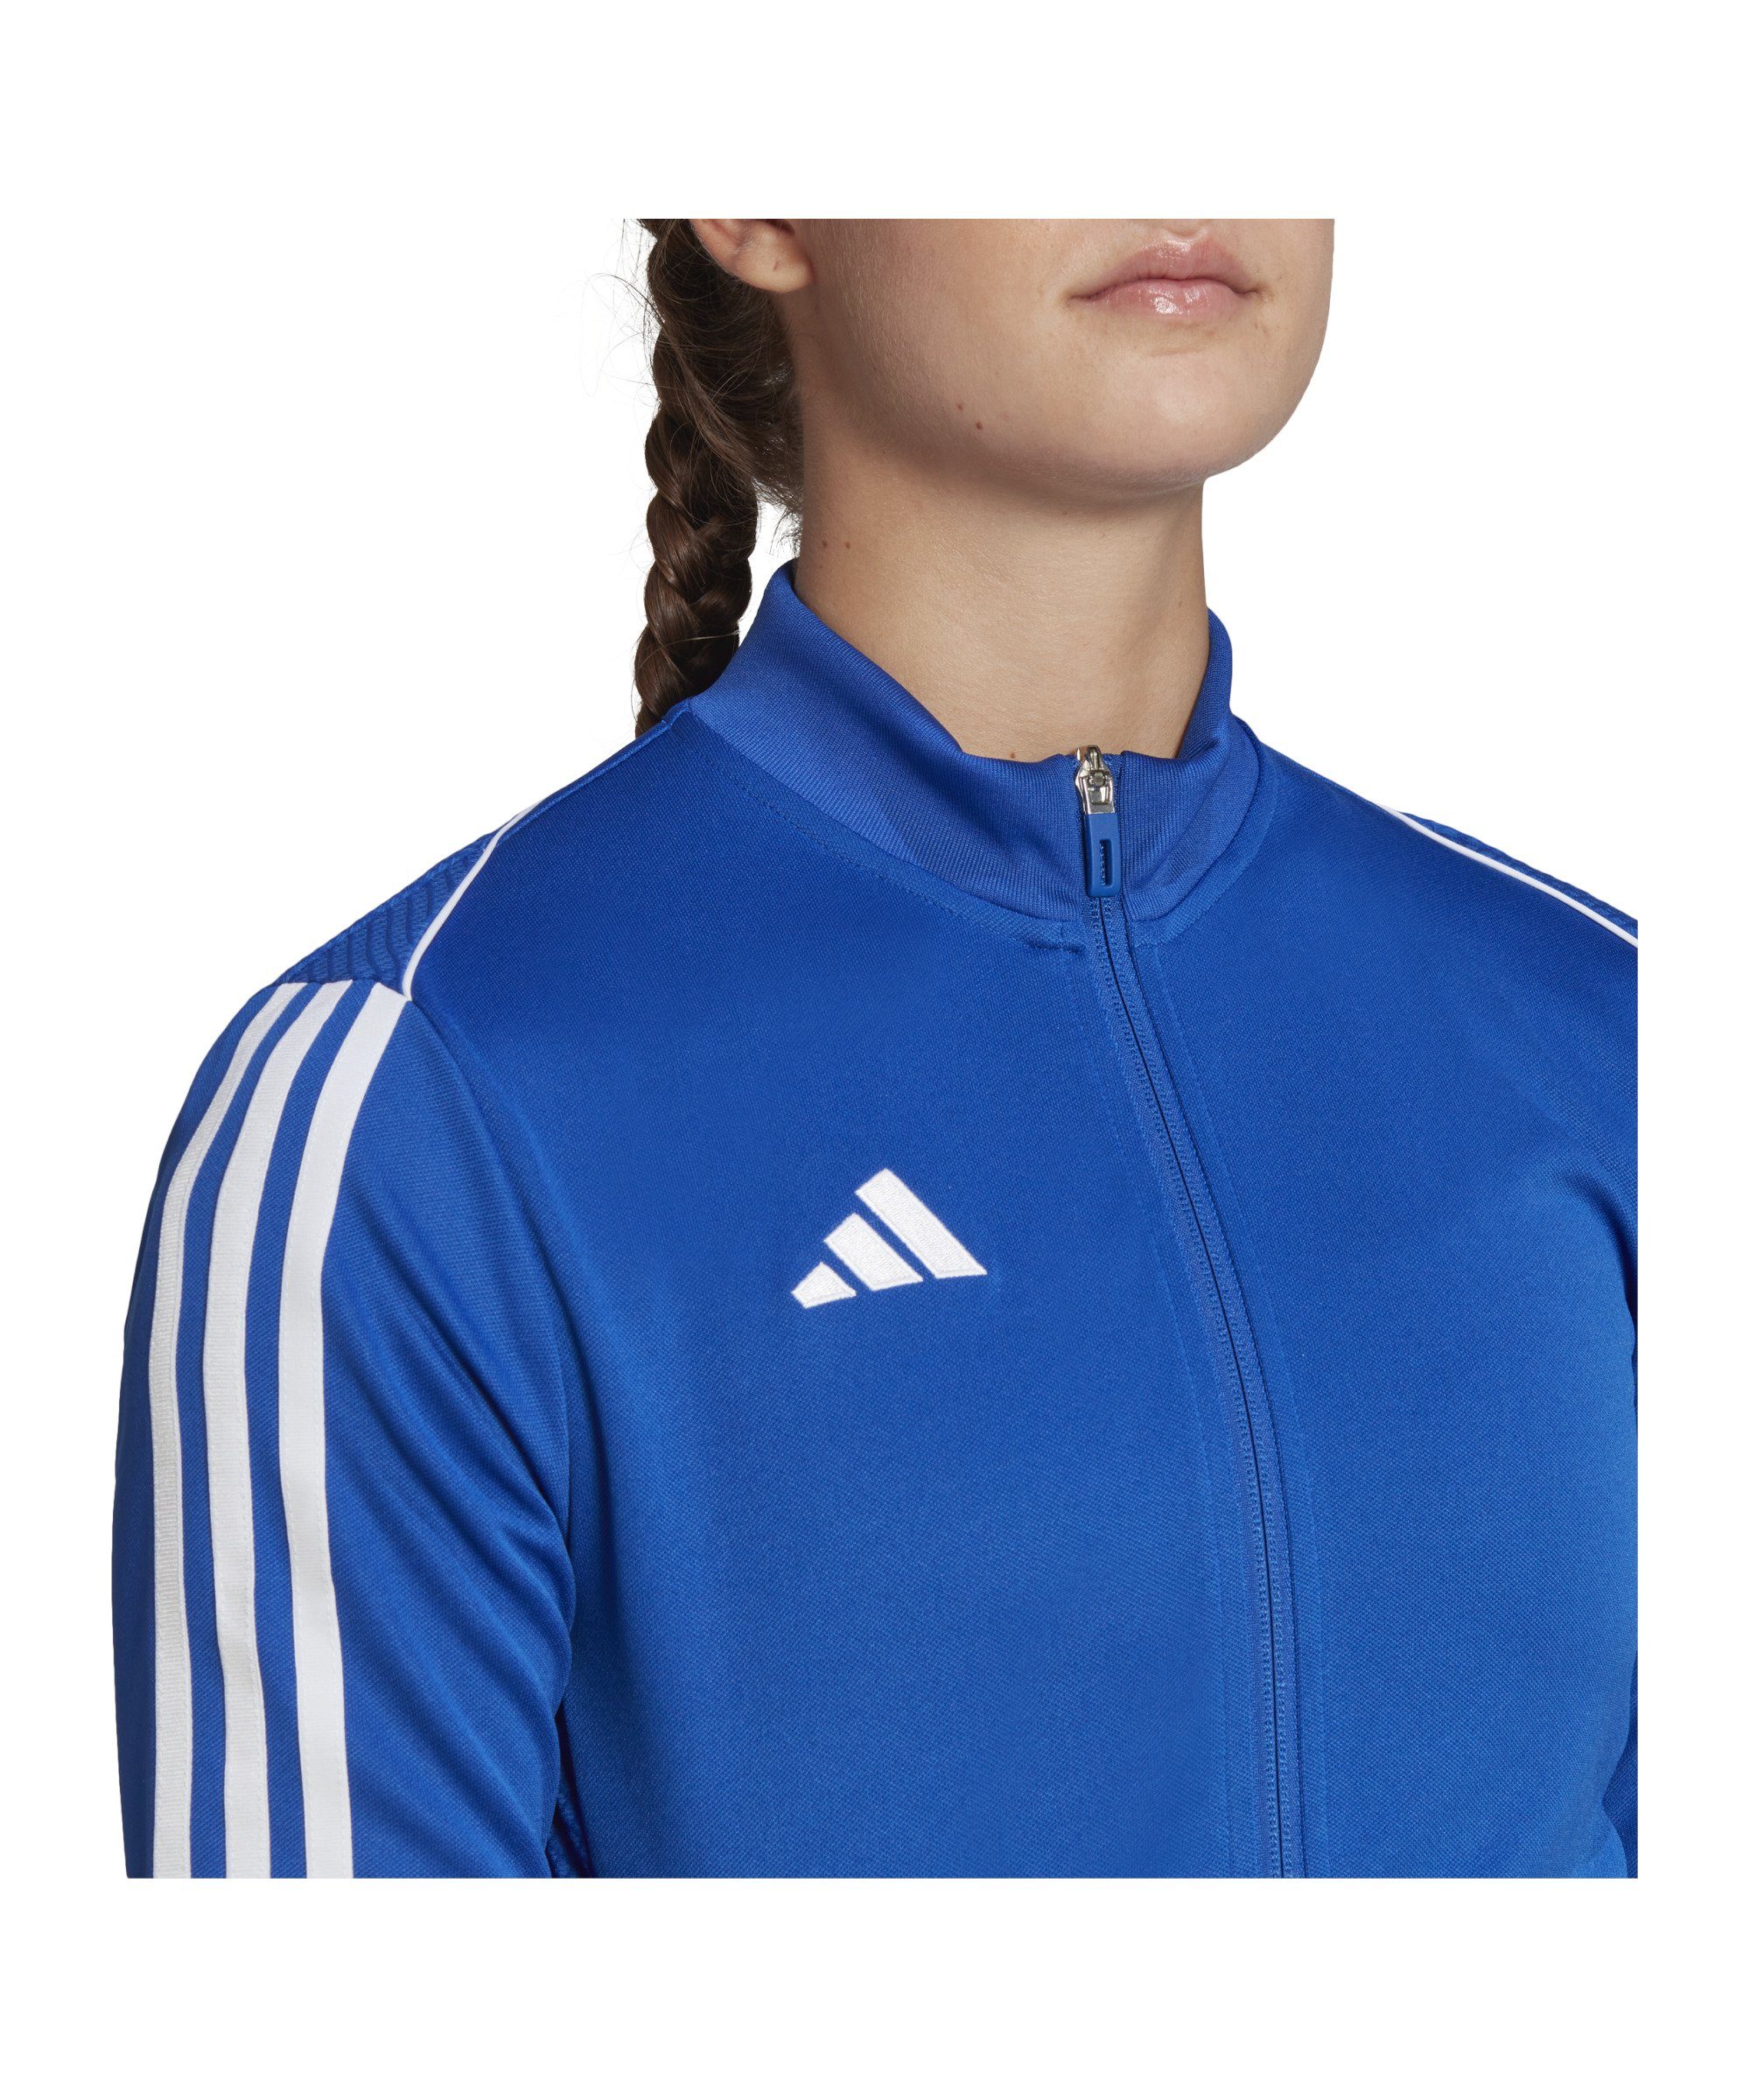 Tiro League Damen adidas blauweissweiss Trainingsjacke Trainingsjacke 23 Performance